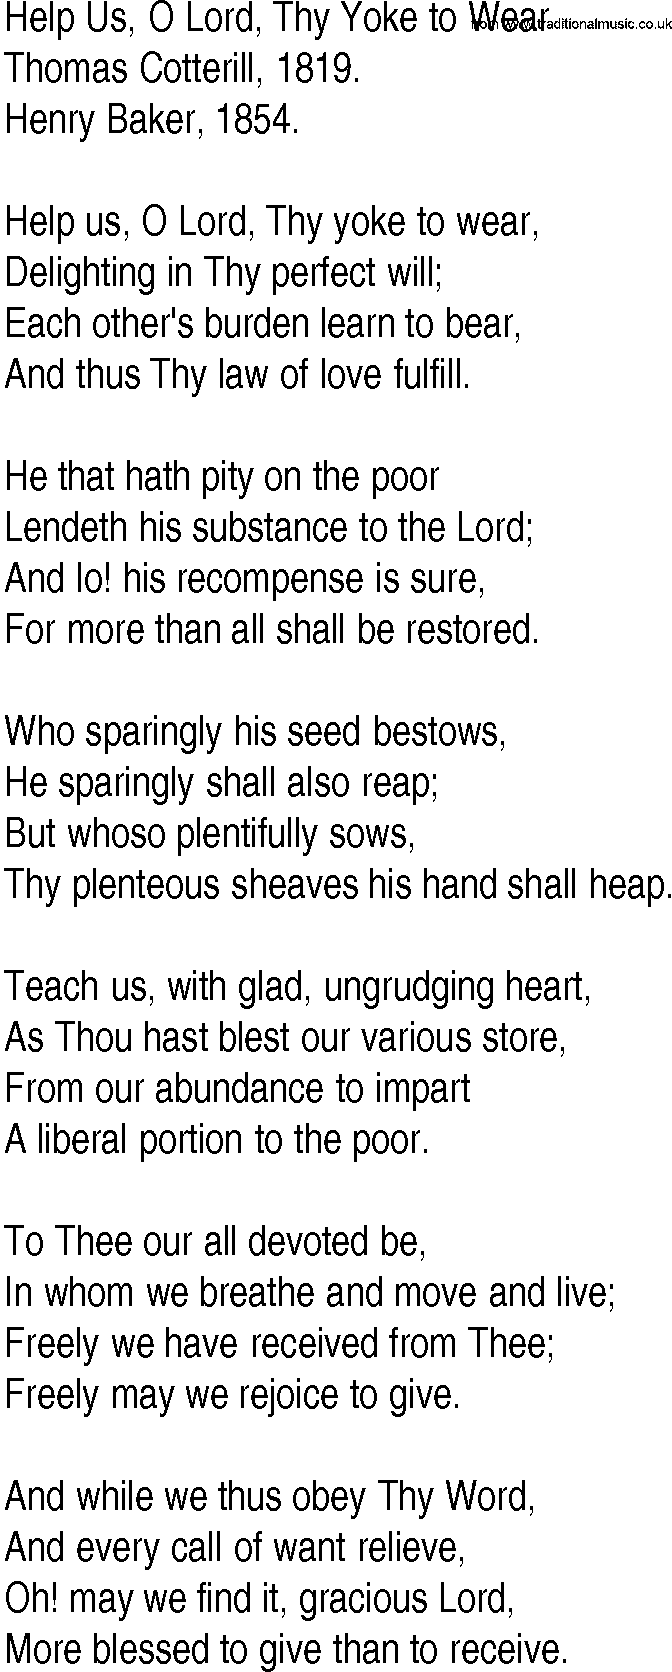 Hymn and Gospel Song: Help Us, O Lord, Thy Yoke to Wear by Thomas Cotterill lyrics